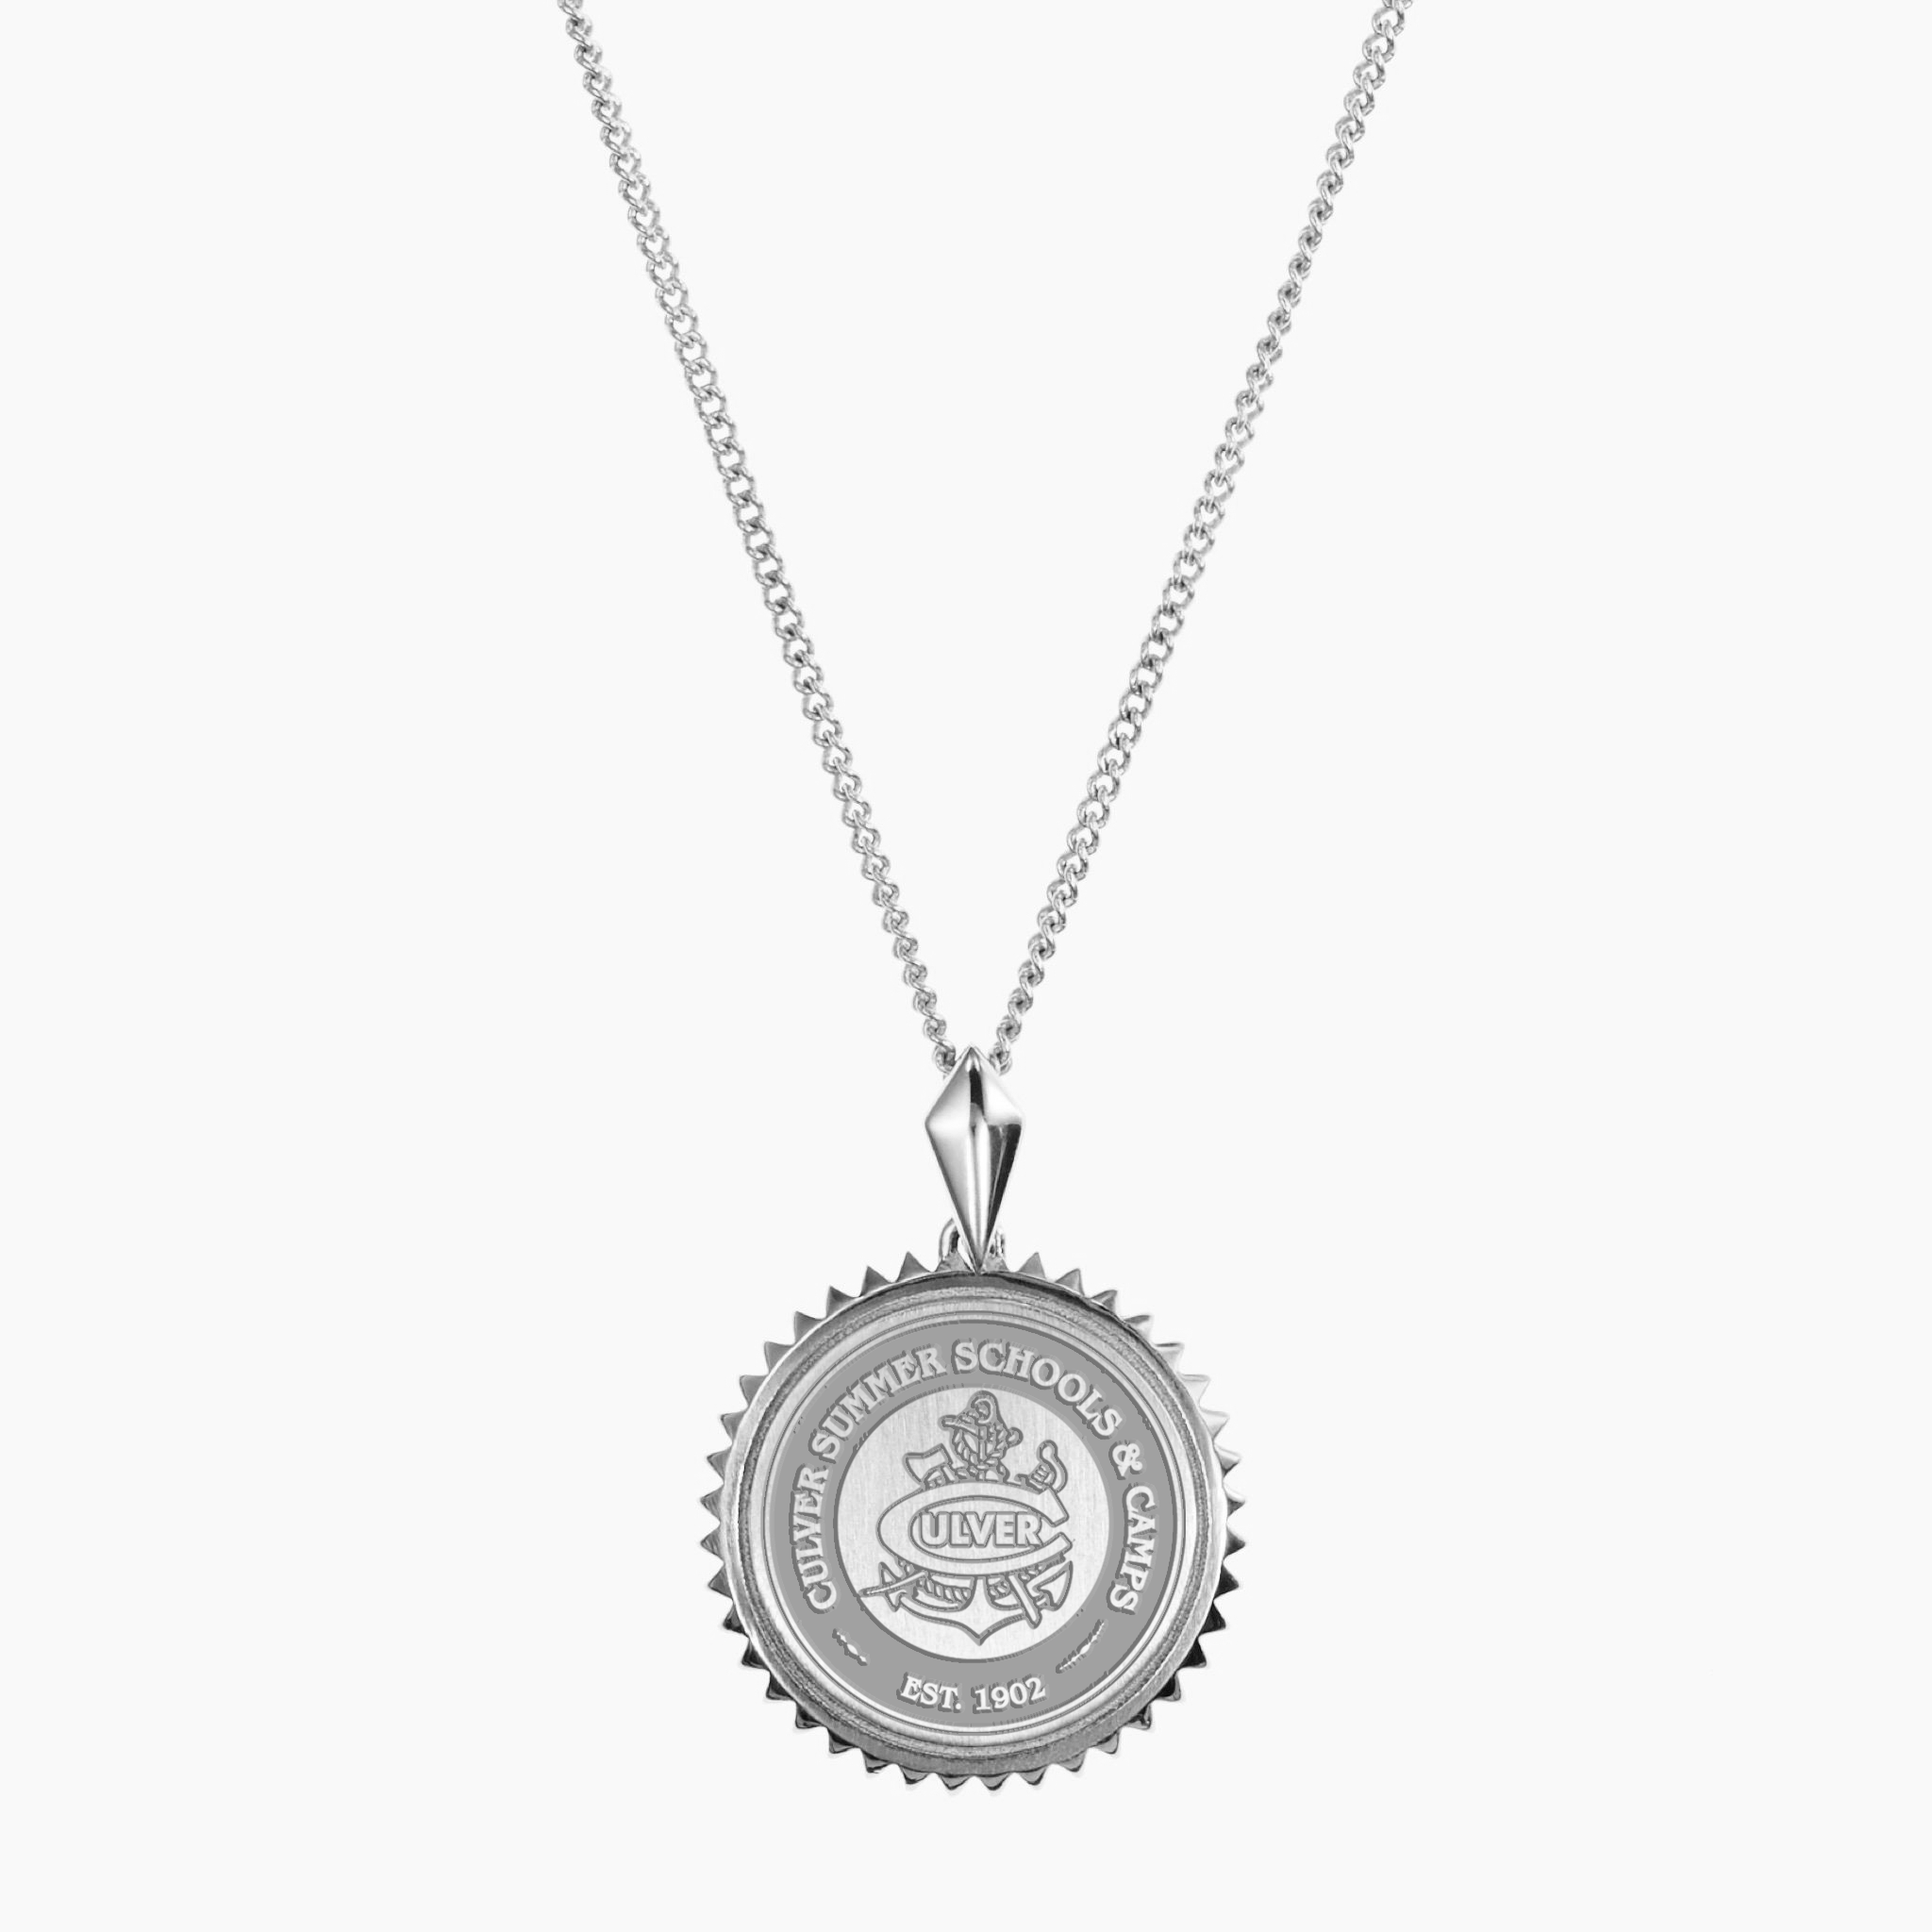 CSSC Seal Sunburst Necklace - Sterling Silver